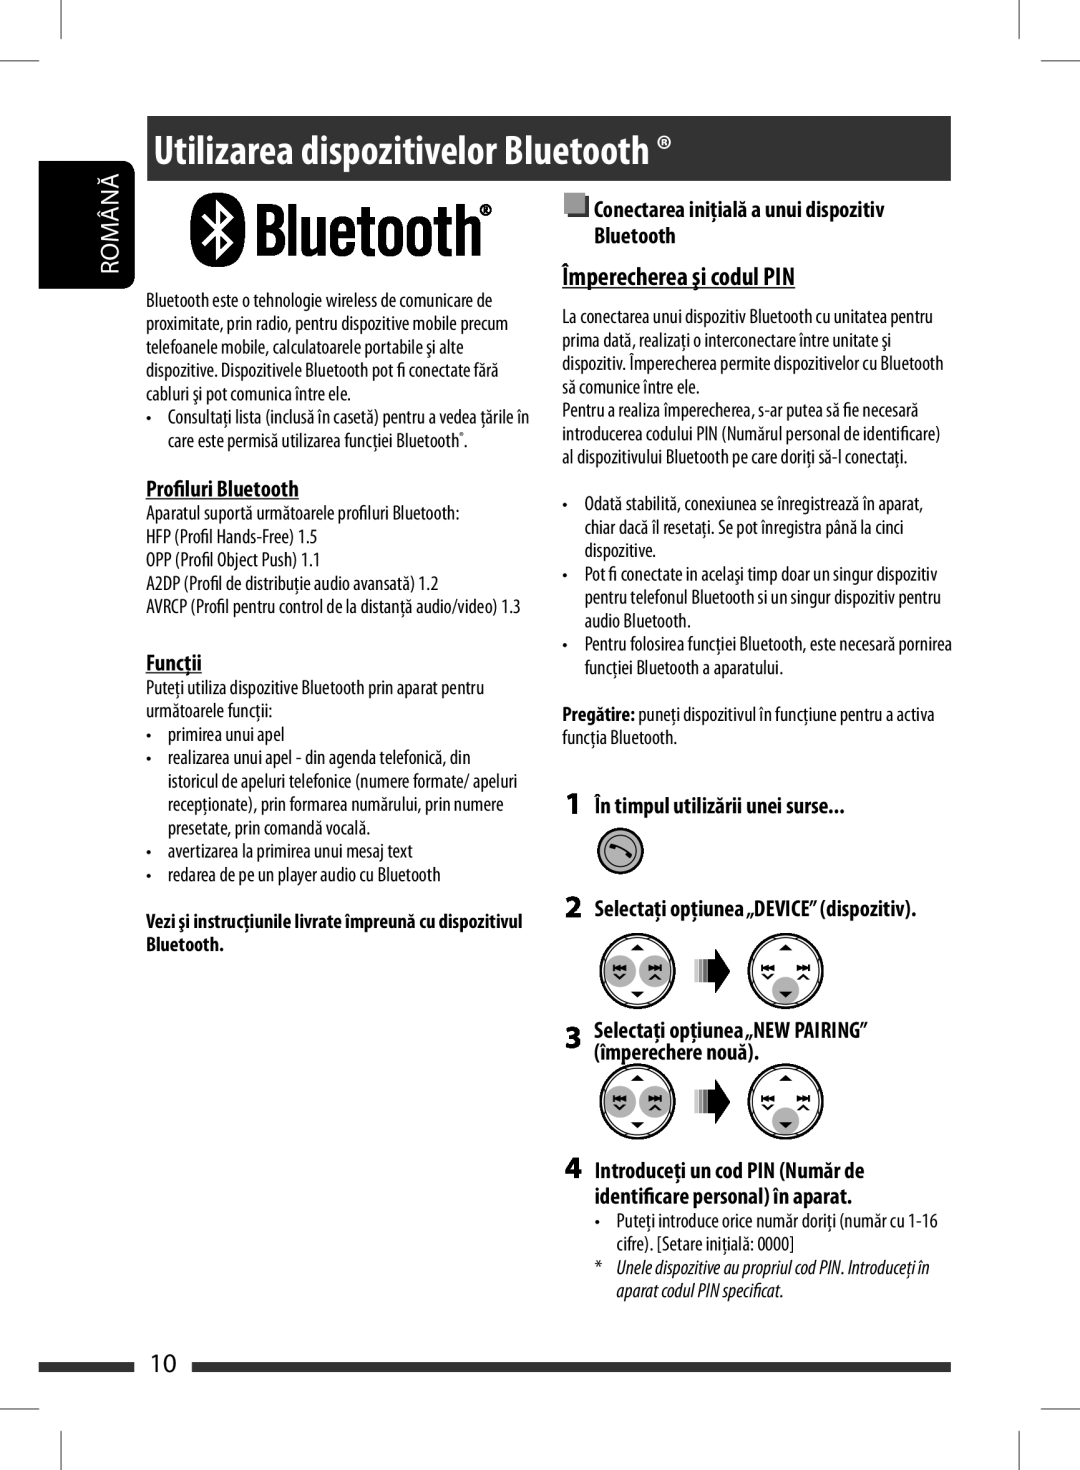 JVC KD-BT11 manual Features, Profilurifunction.Bluetooth, ÎmperechereaPairing and PINşicodecodul PIN, Română 